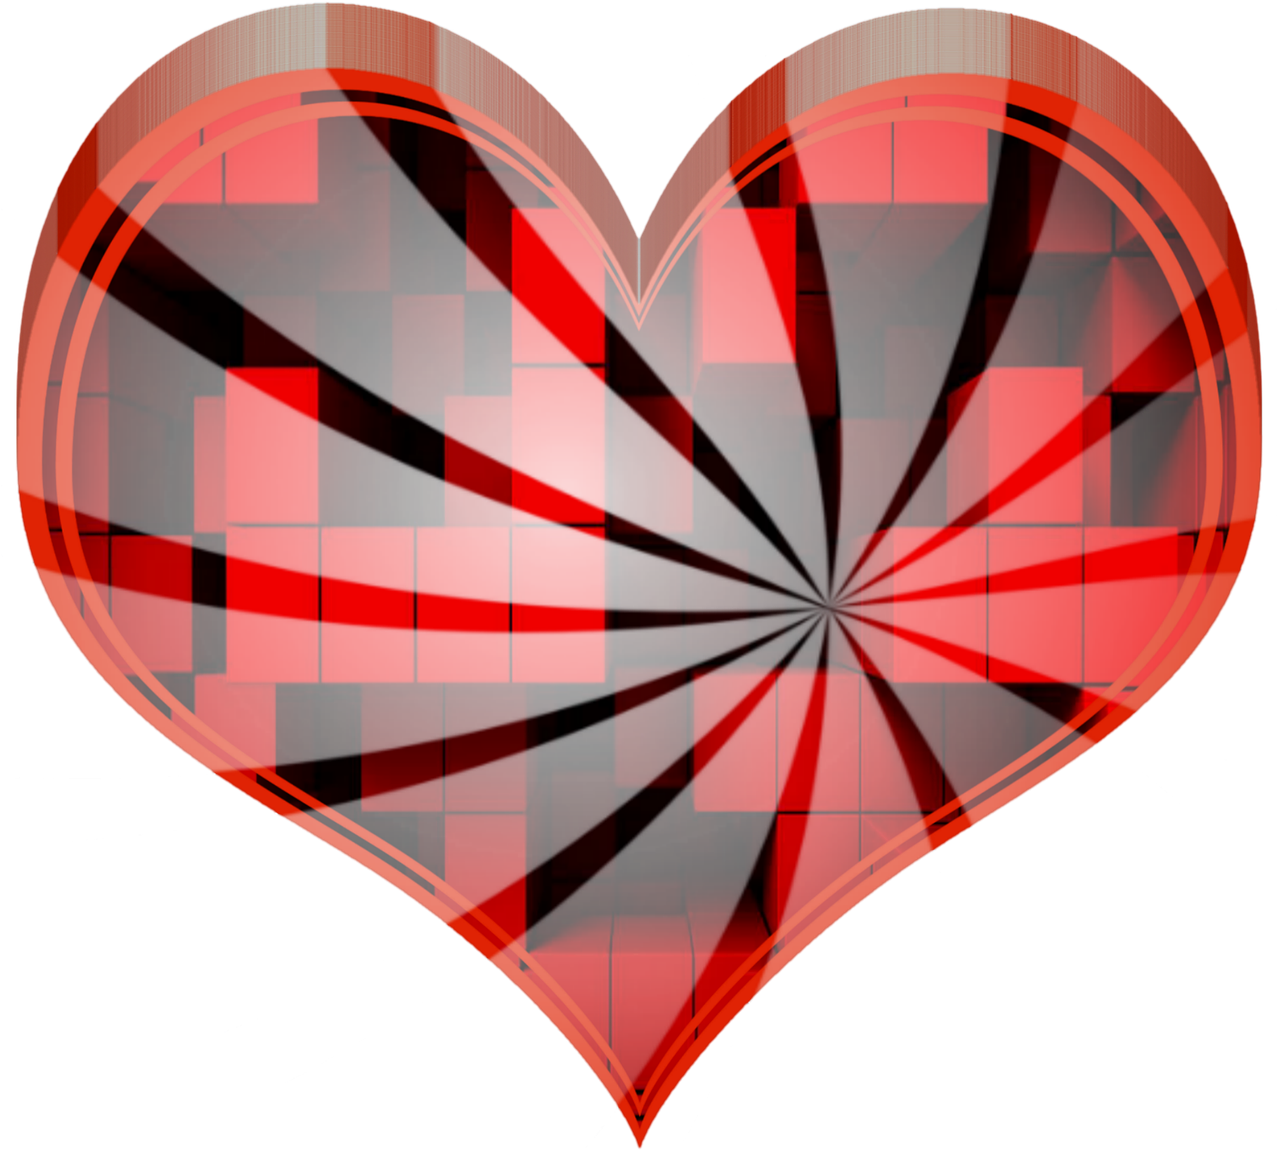 3D Heart PNG Image File